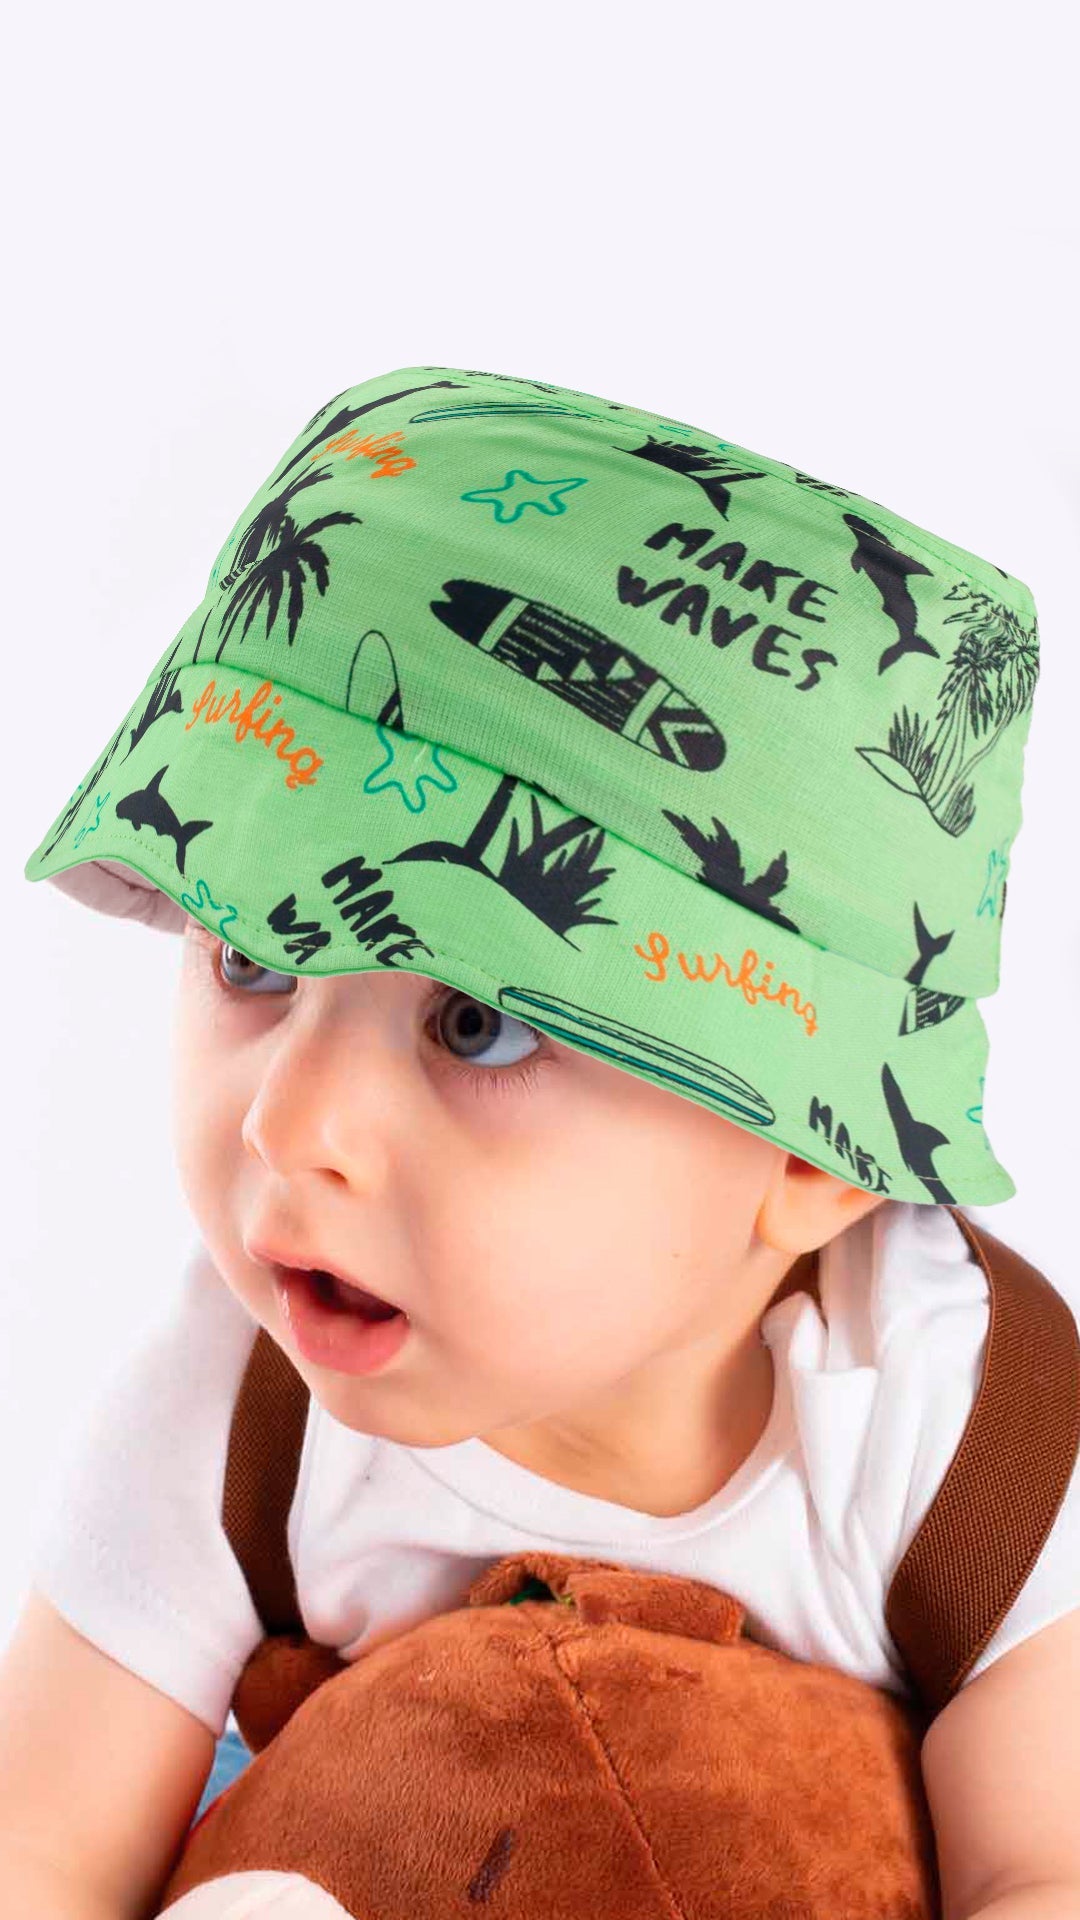 Toddler Bucket Hat - Make Waves Cotton Printed Toddler Summer Hat, 1 - 3  Years